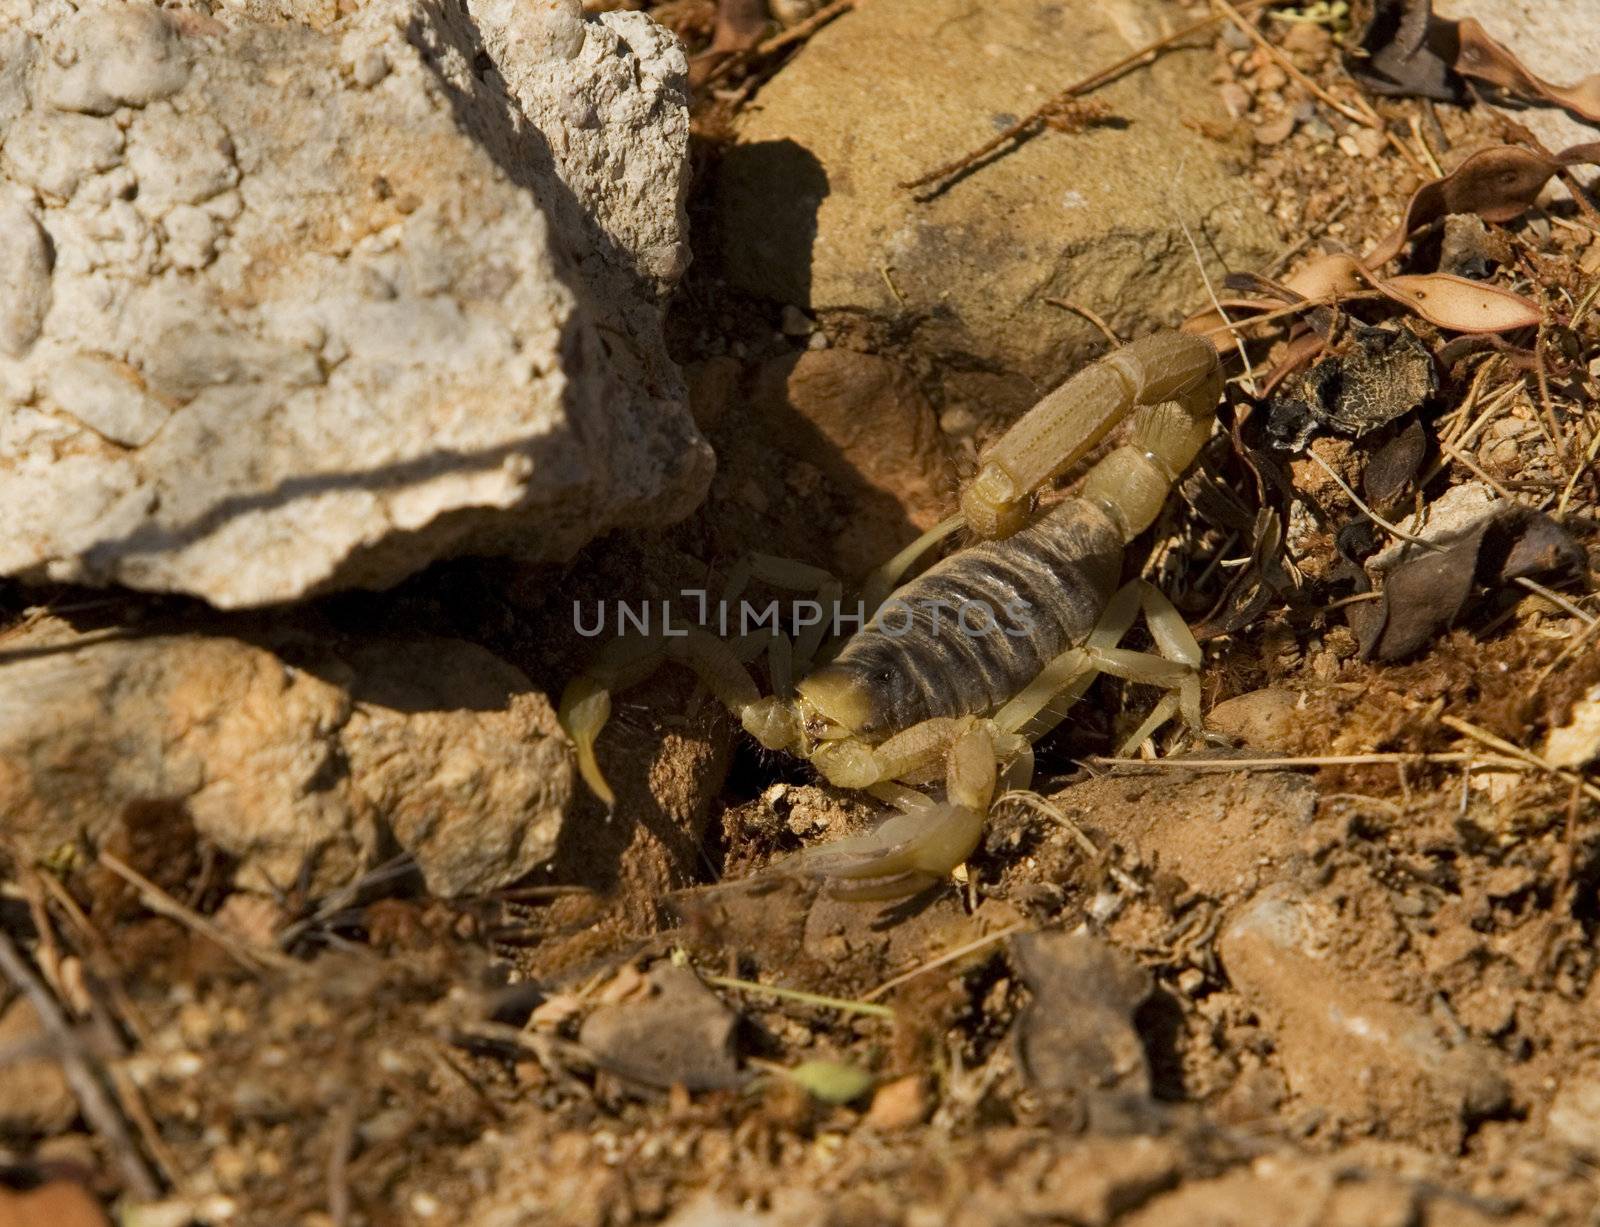 Desert Striped Scorpion by Creatista